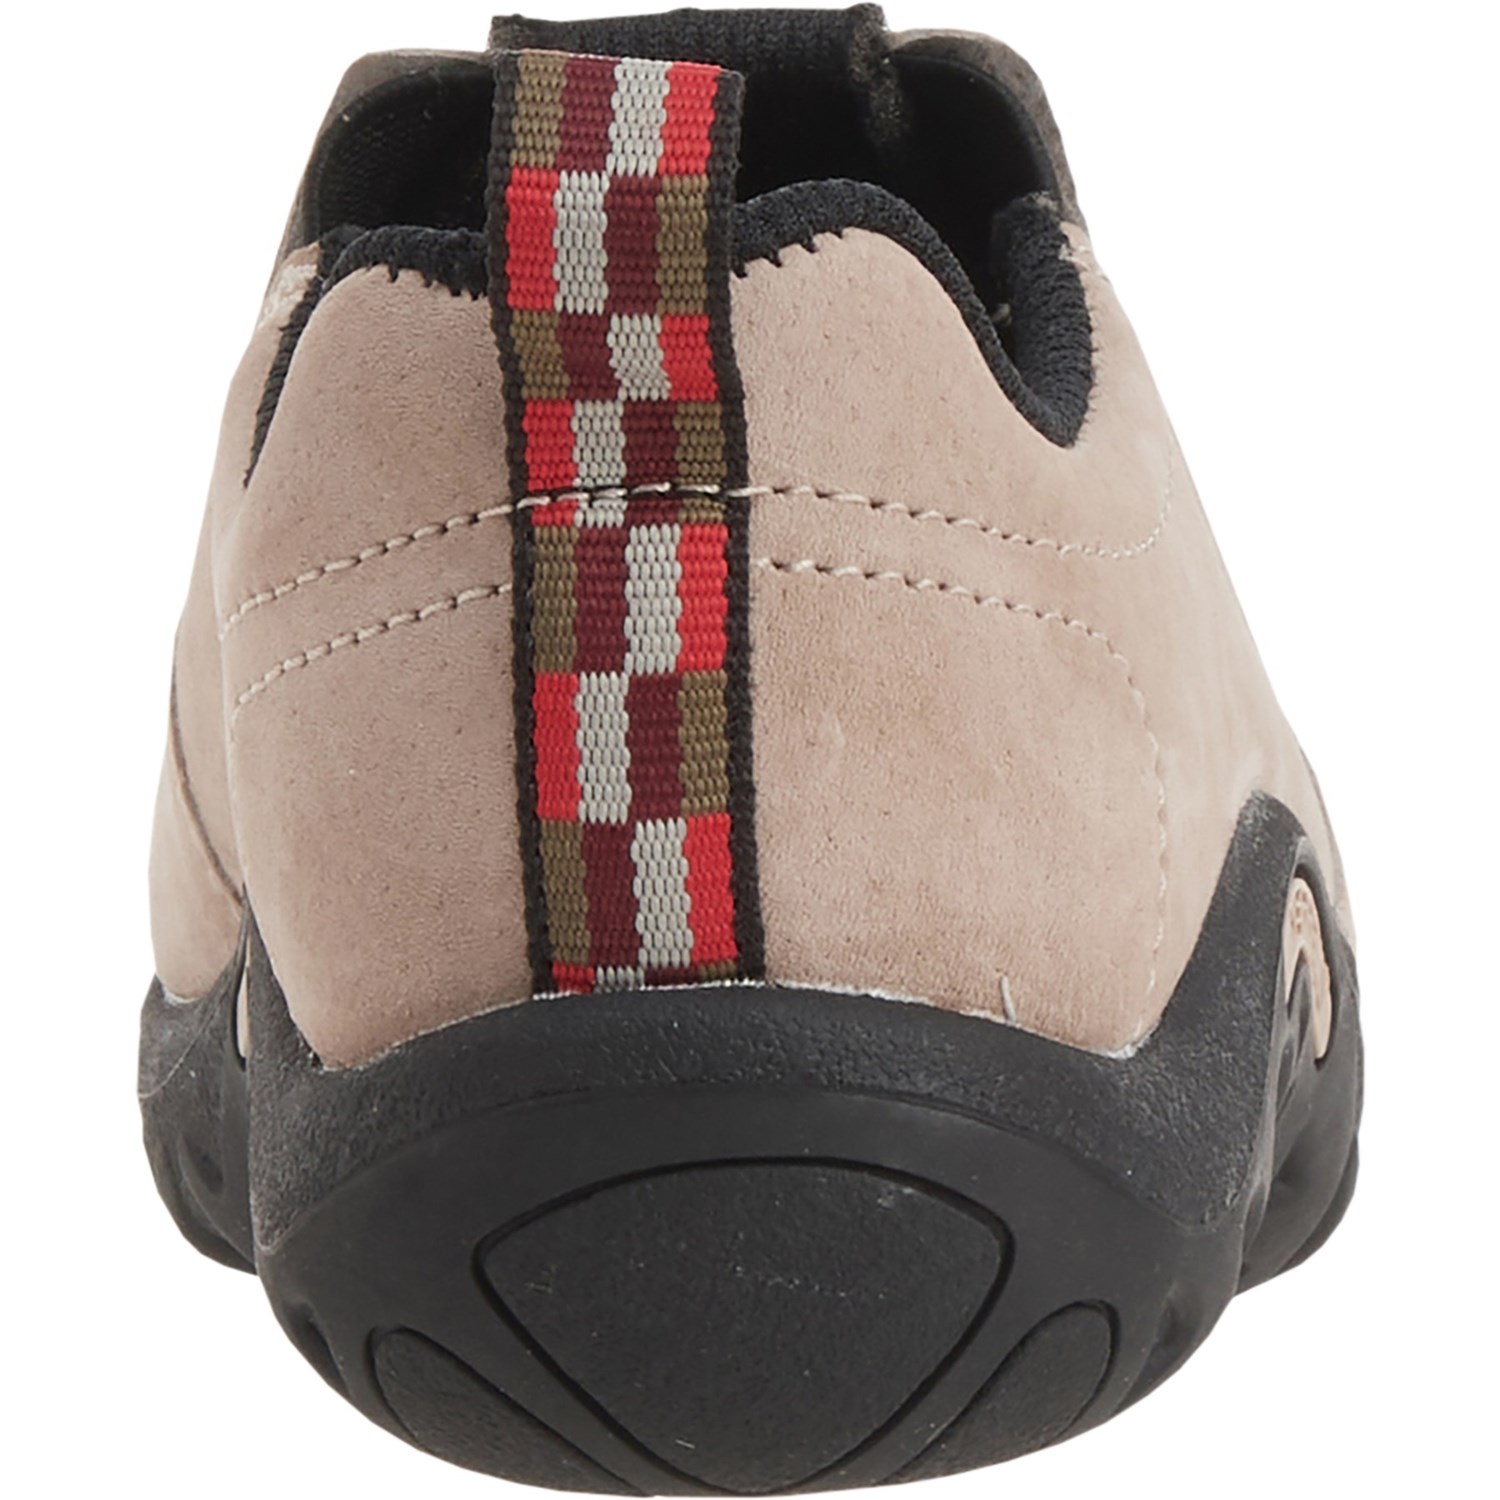 Merrell Boys Jungle Moc Shoes - Nubuck, Slip-Ons - Save 60%